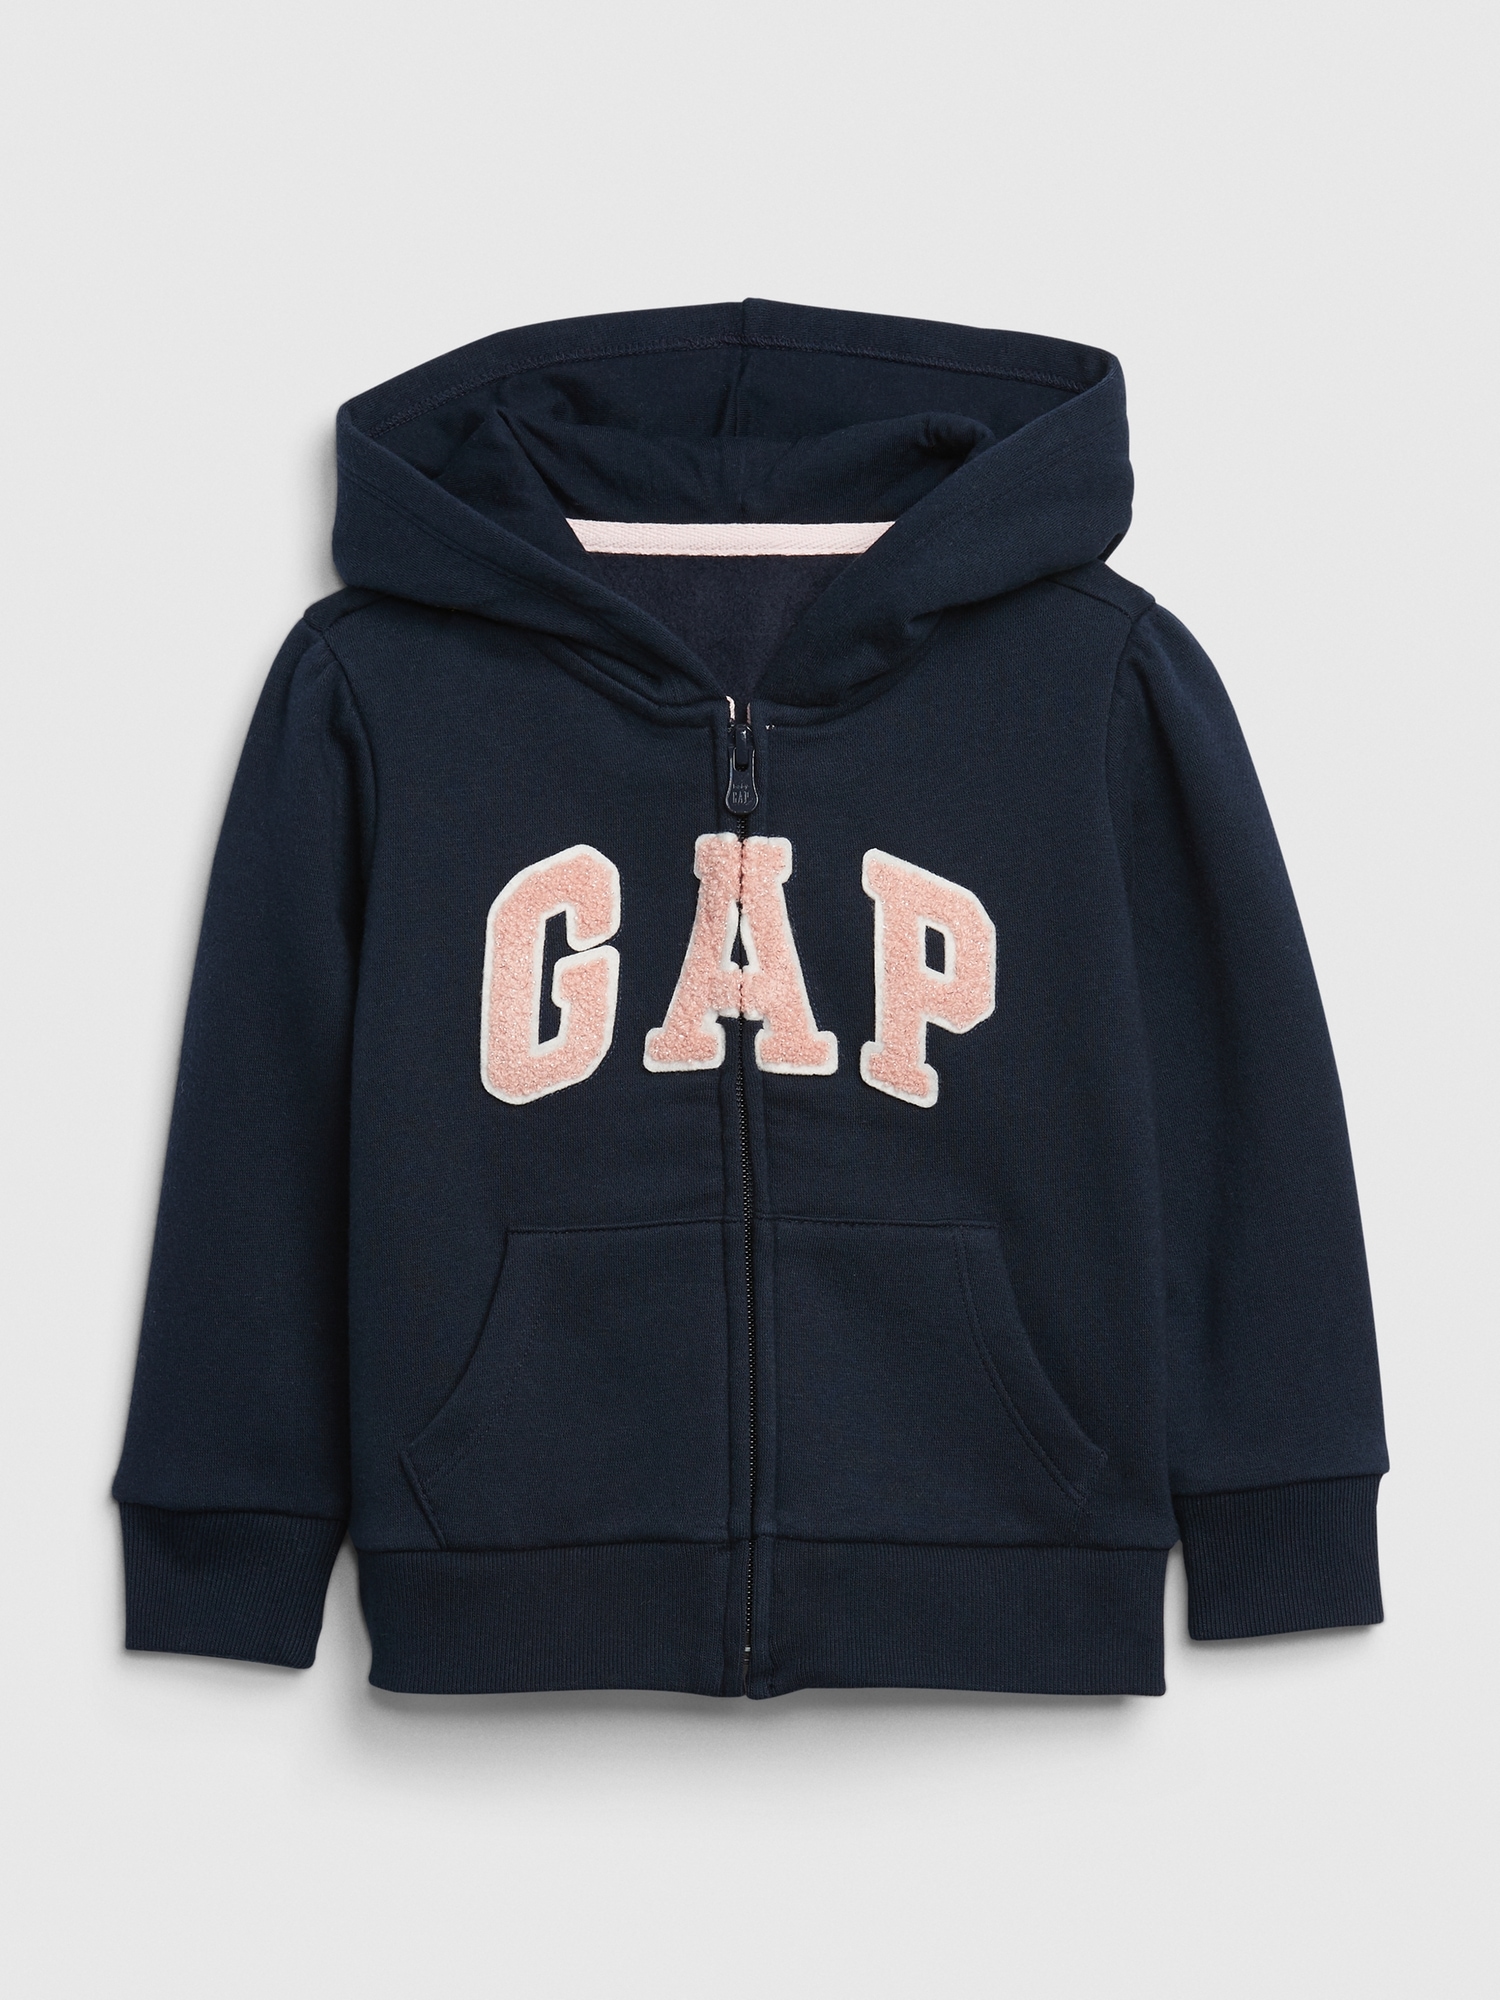 New Boy Gap Gapfit Logo Hoodie Sweatshirt Top Blue Orange size XS 4-5 S 6